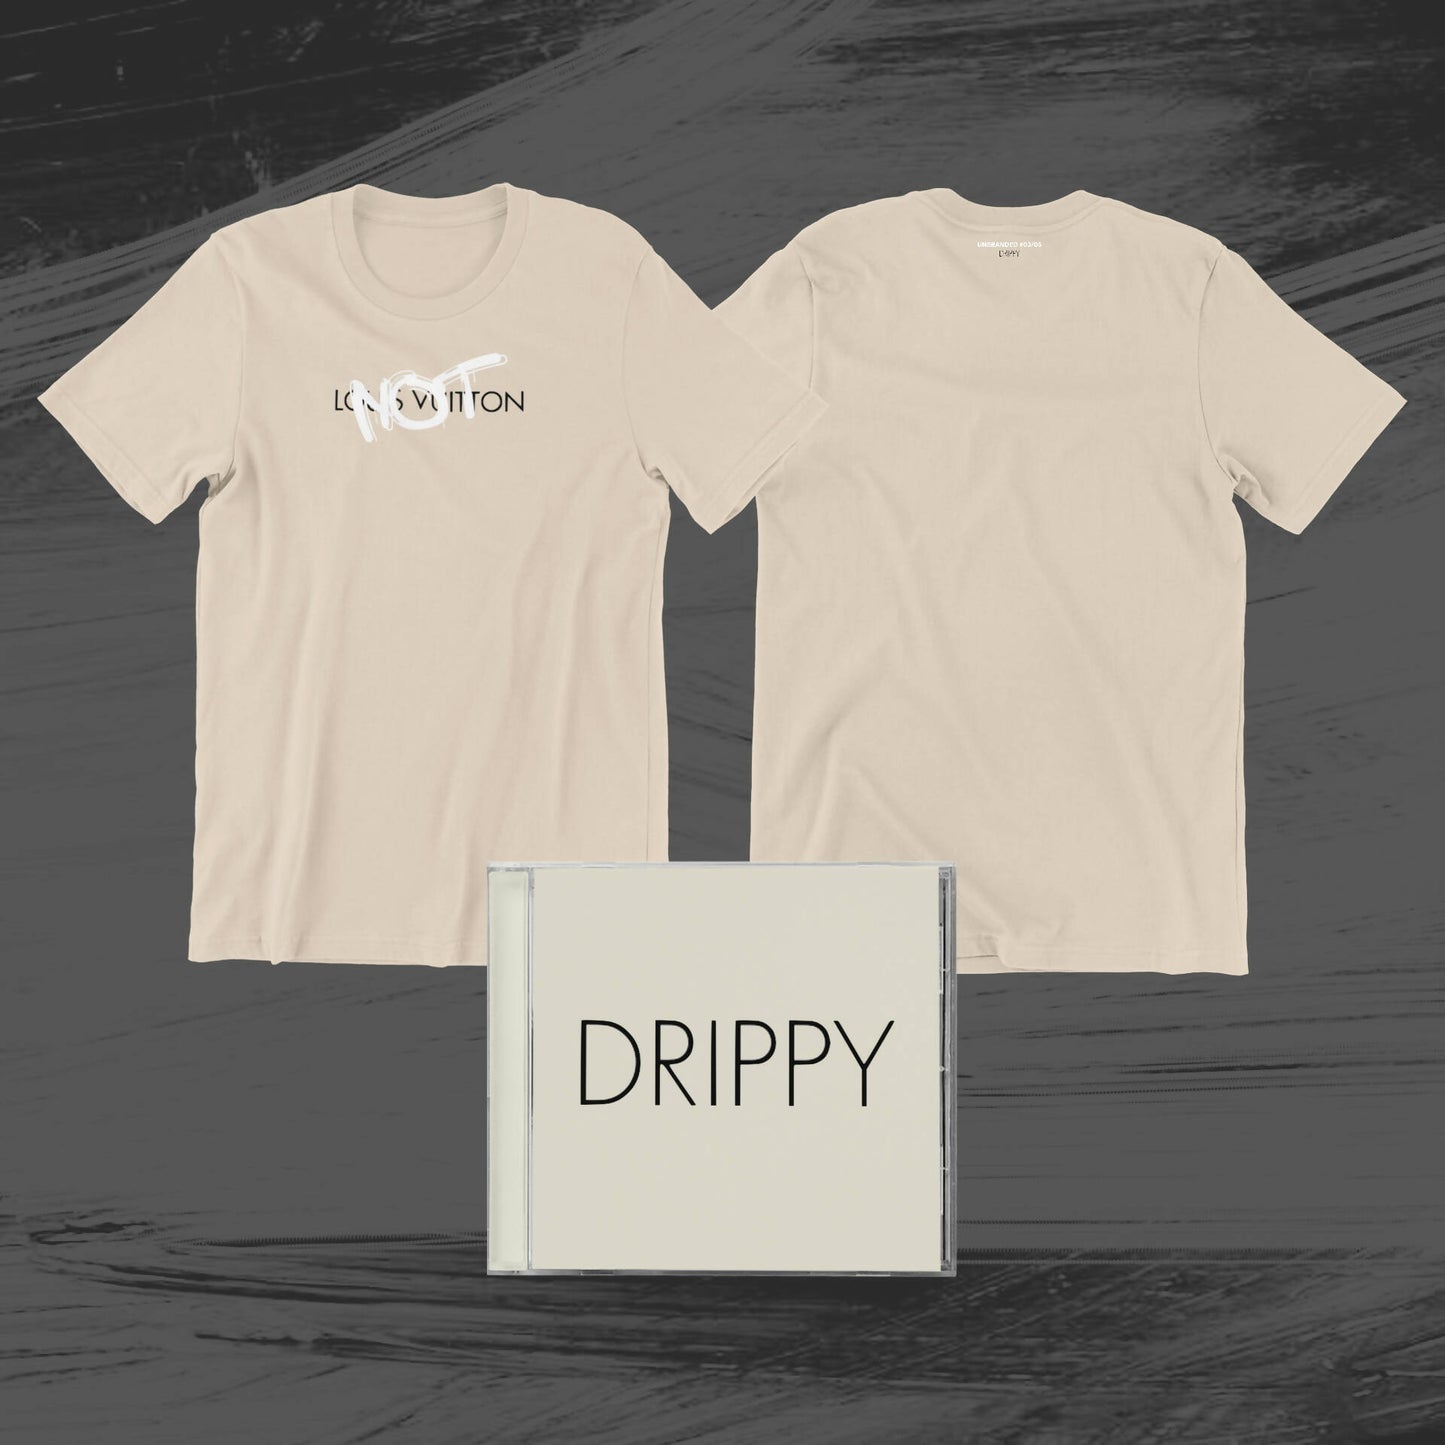 Anti-LV T-shirt Design